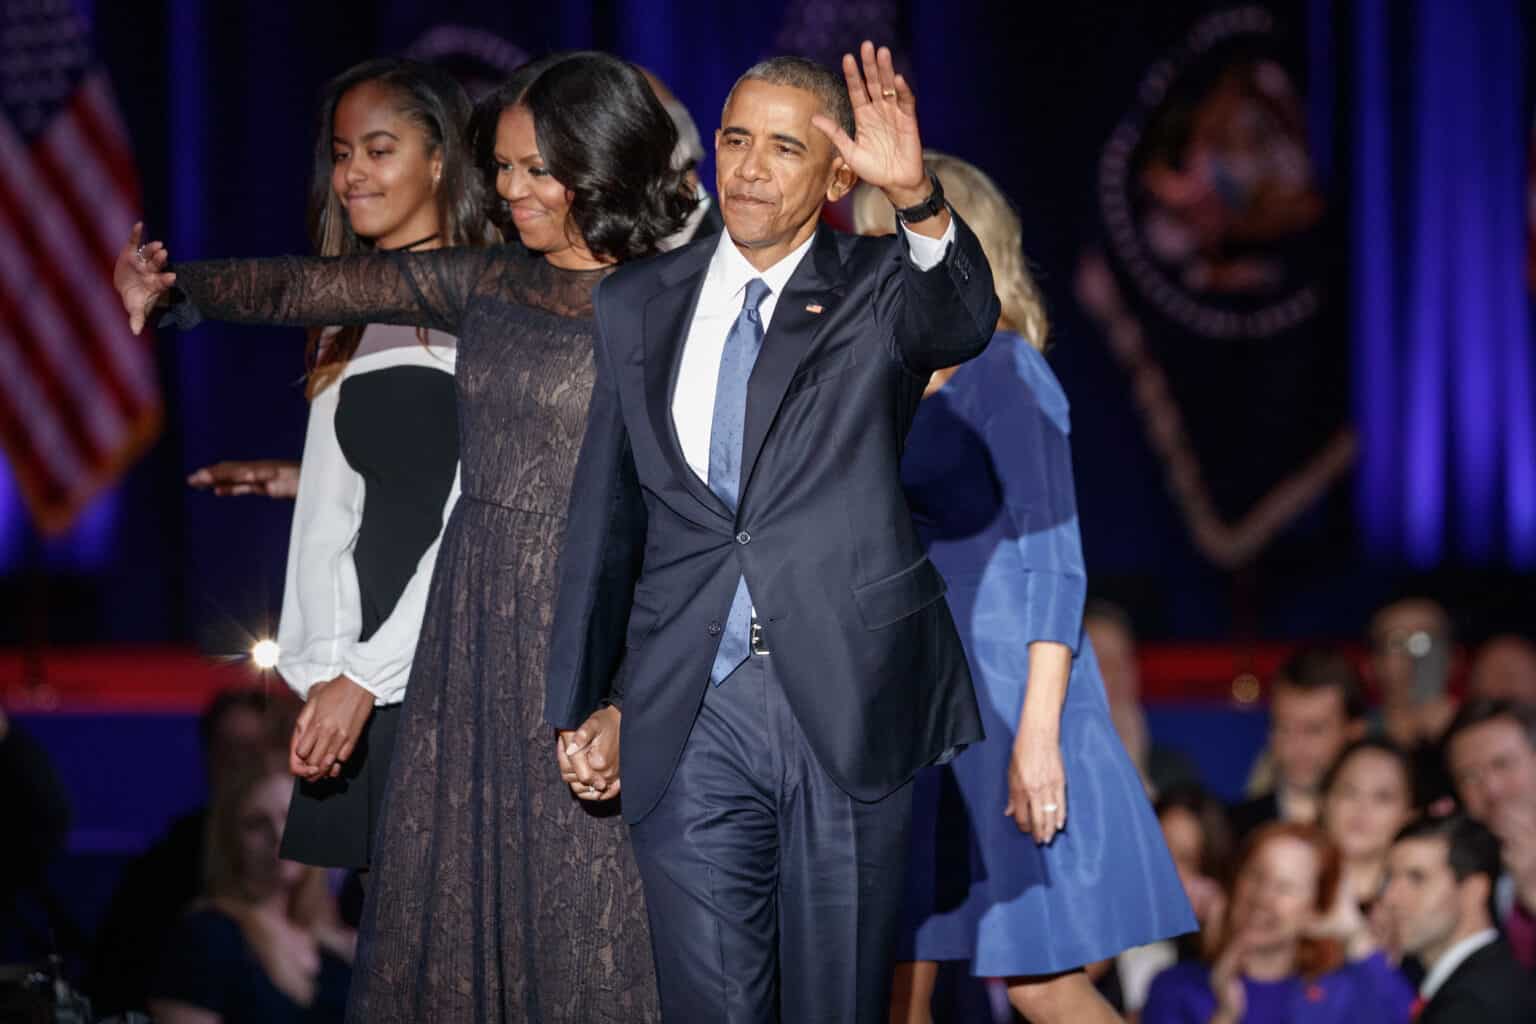 Who Are Barack & Michelle Obama's Closest Friends?